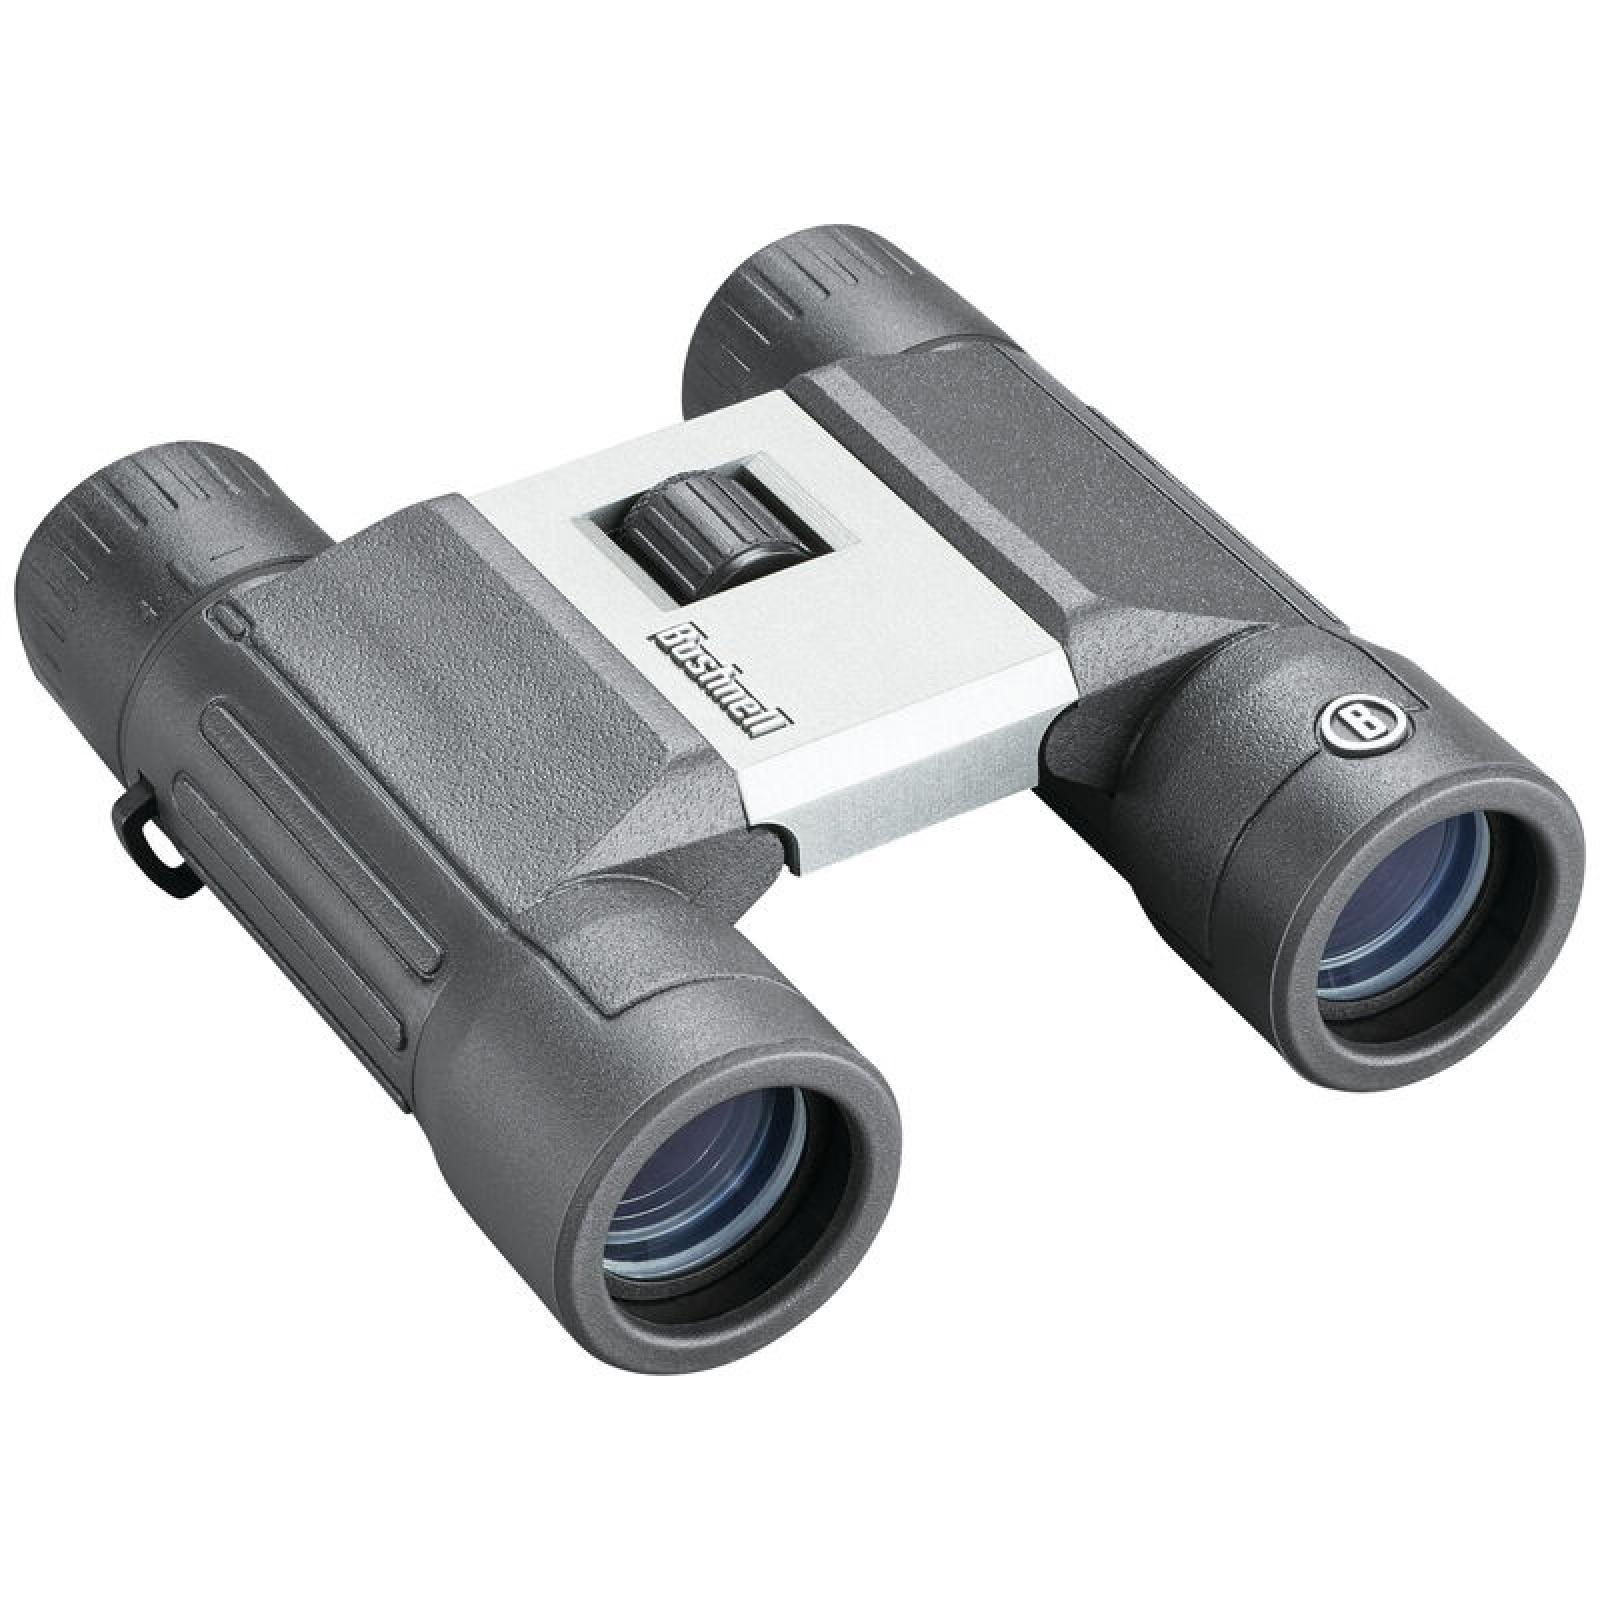 Bushnell Powerview 2 10x25mm Binoculars